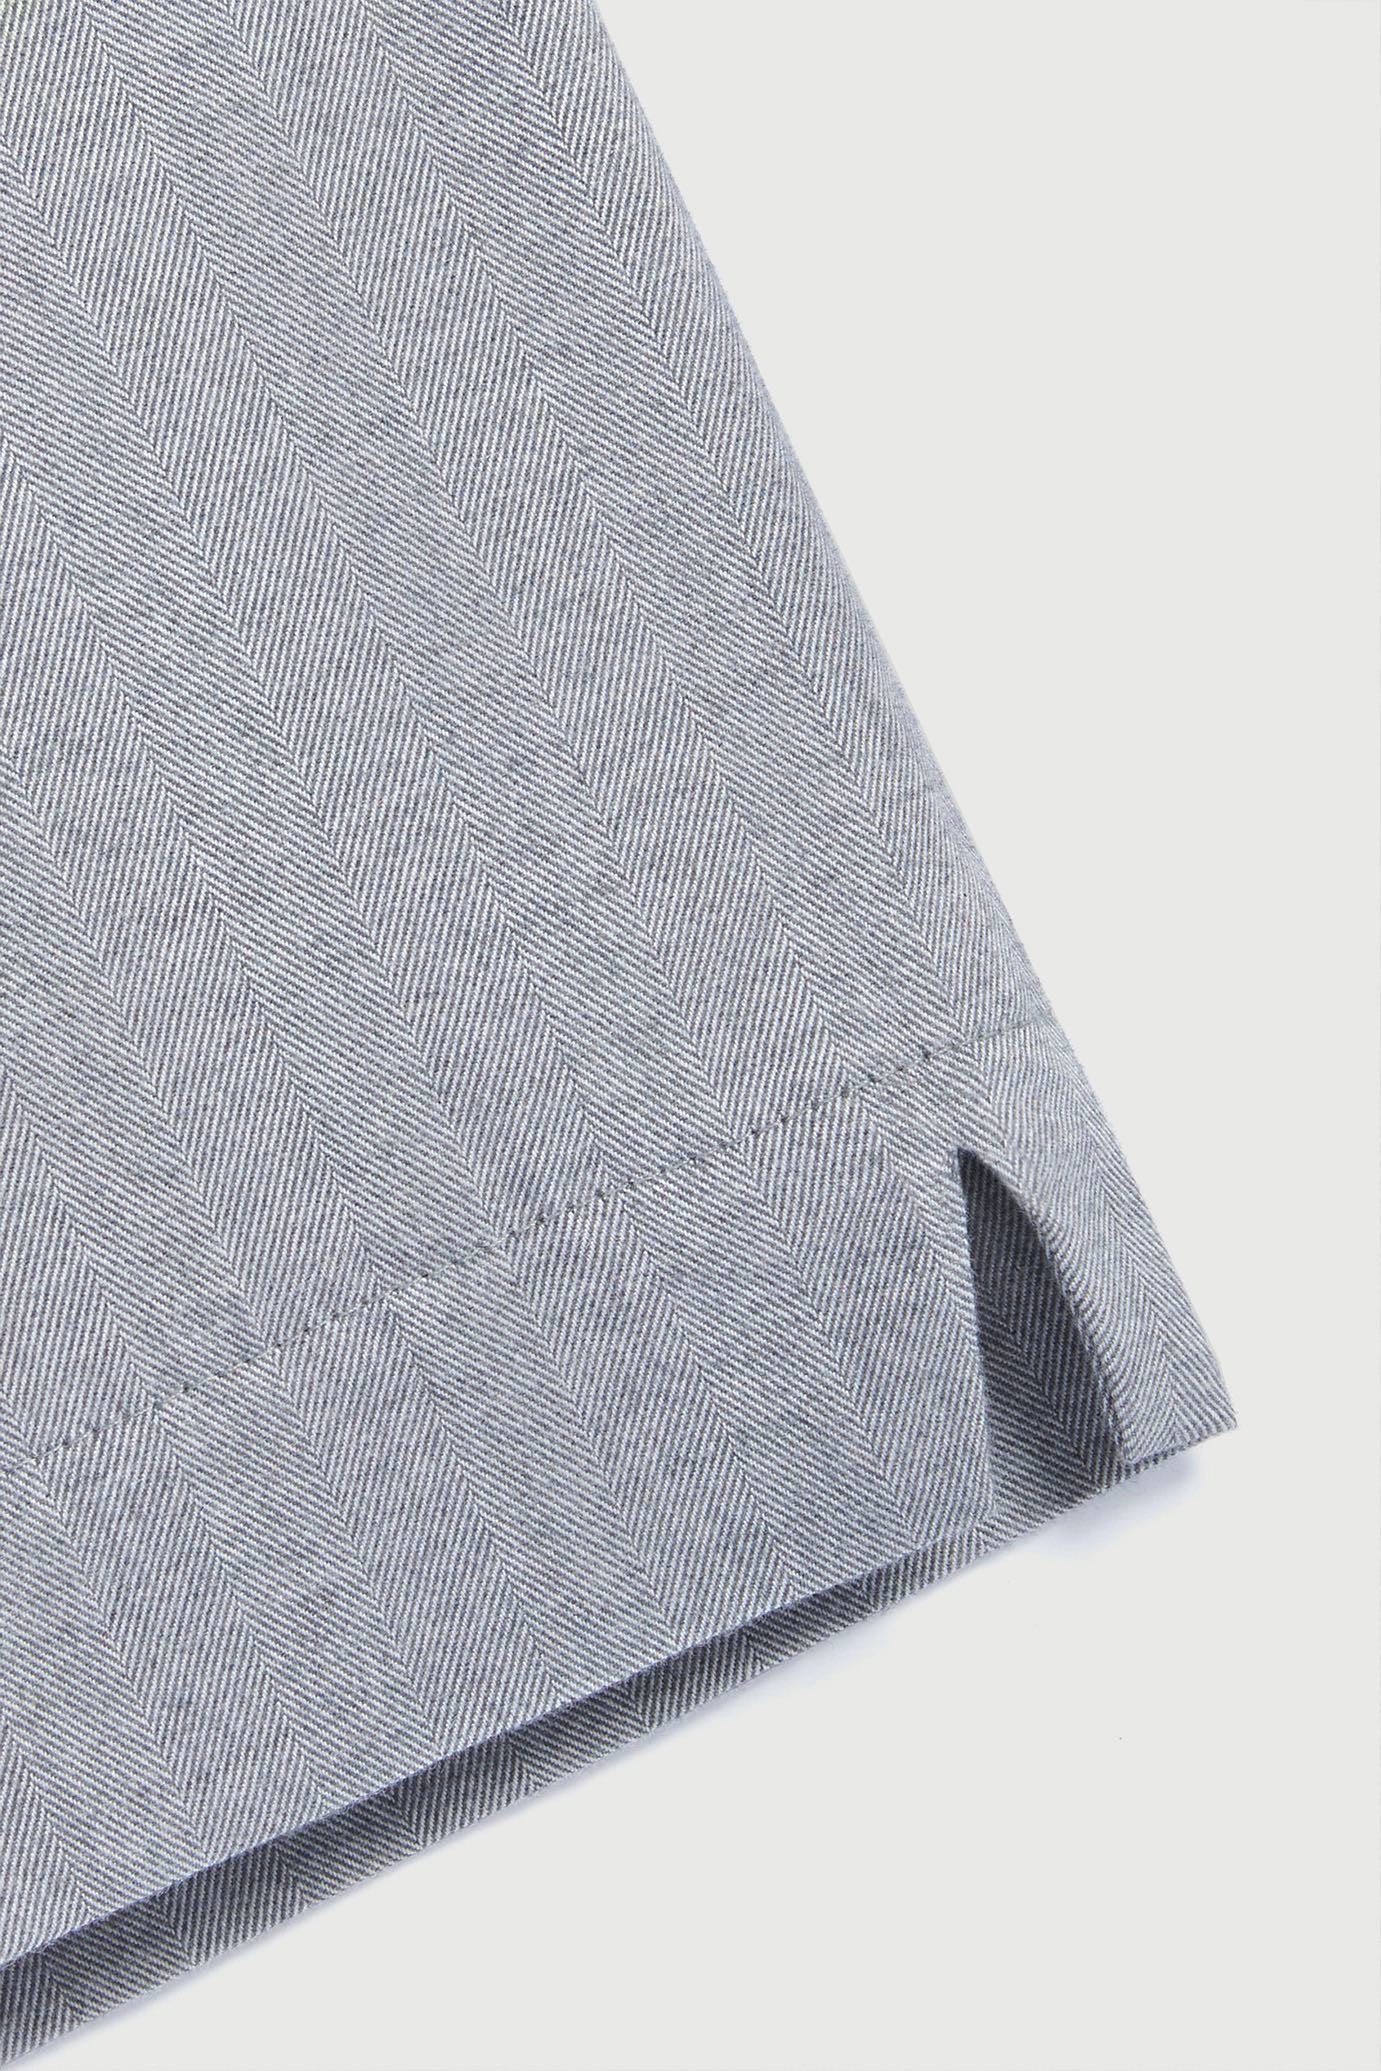 Hem detail, La Boxer Alta in Grey Herringbone, cotton flannel, Comme Si